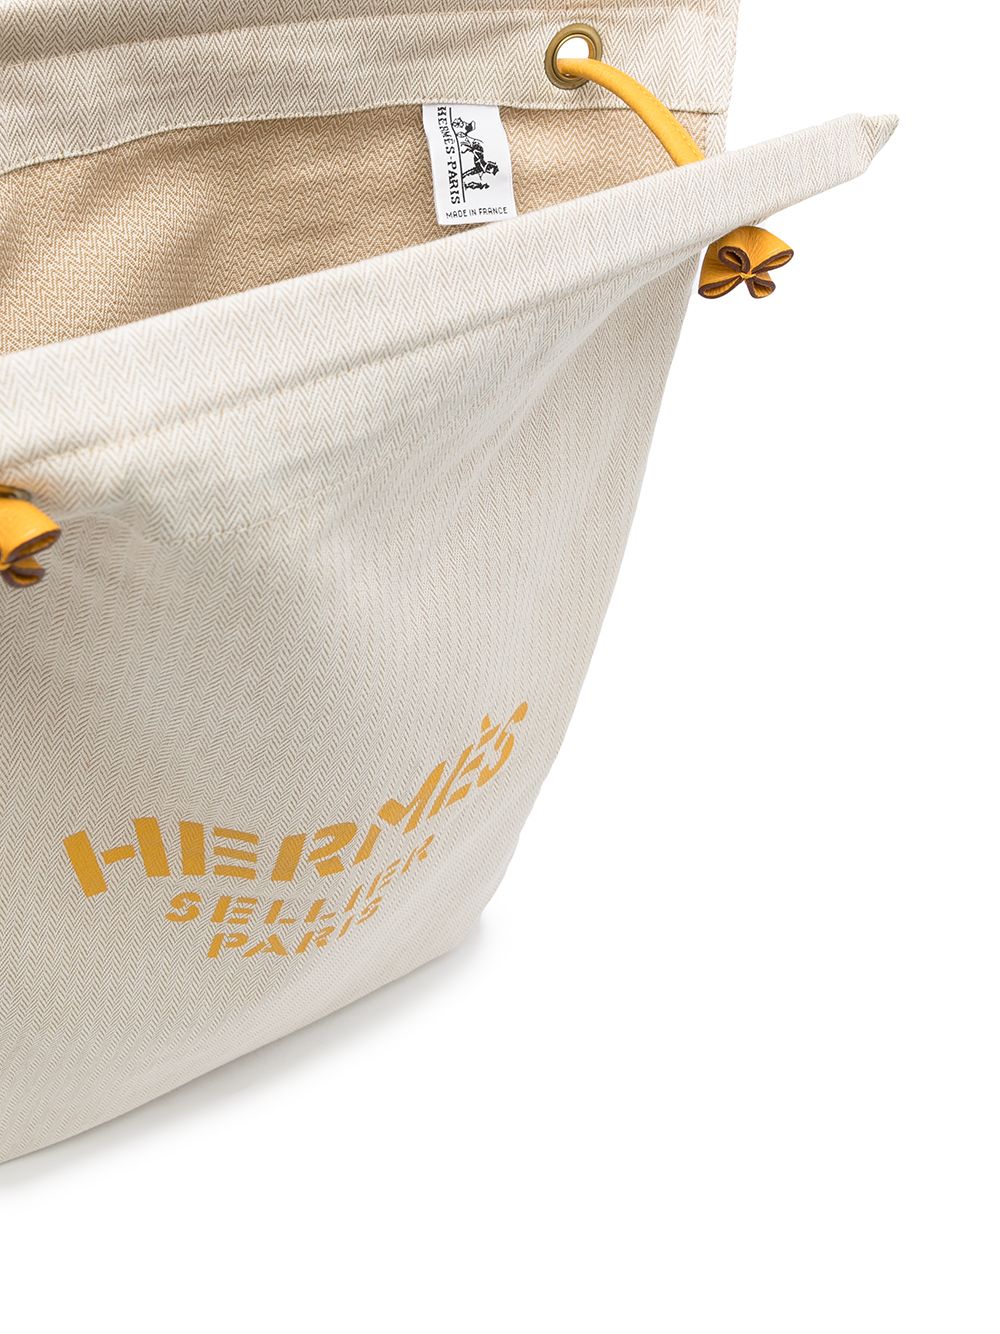 Authenticated Used HERMES Hermes Aline GM shoulder bag cotton canvas  leather natural black brown gold hardware tote 